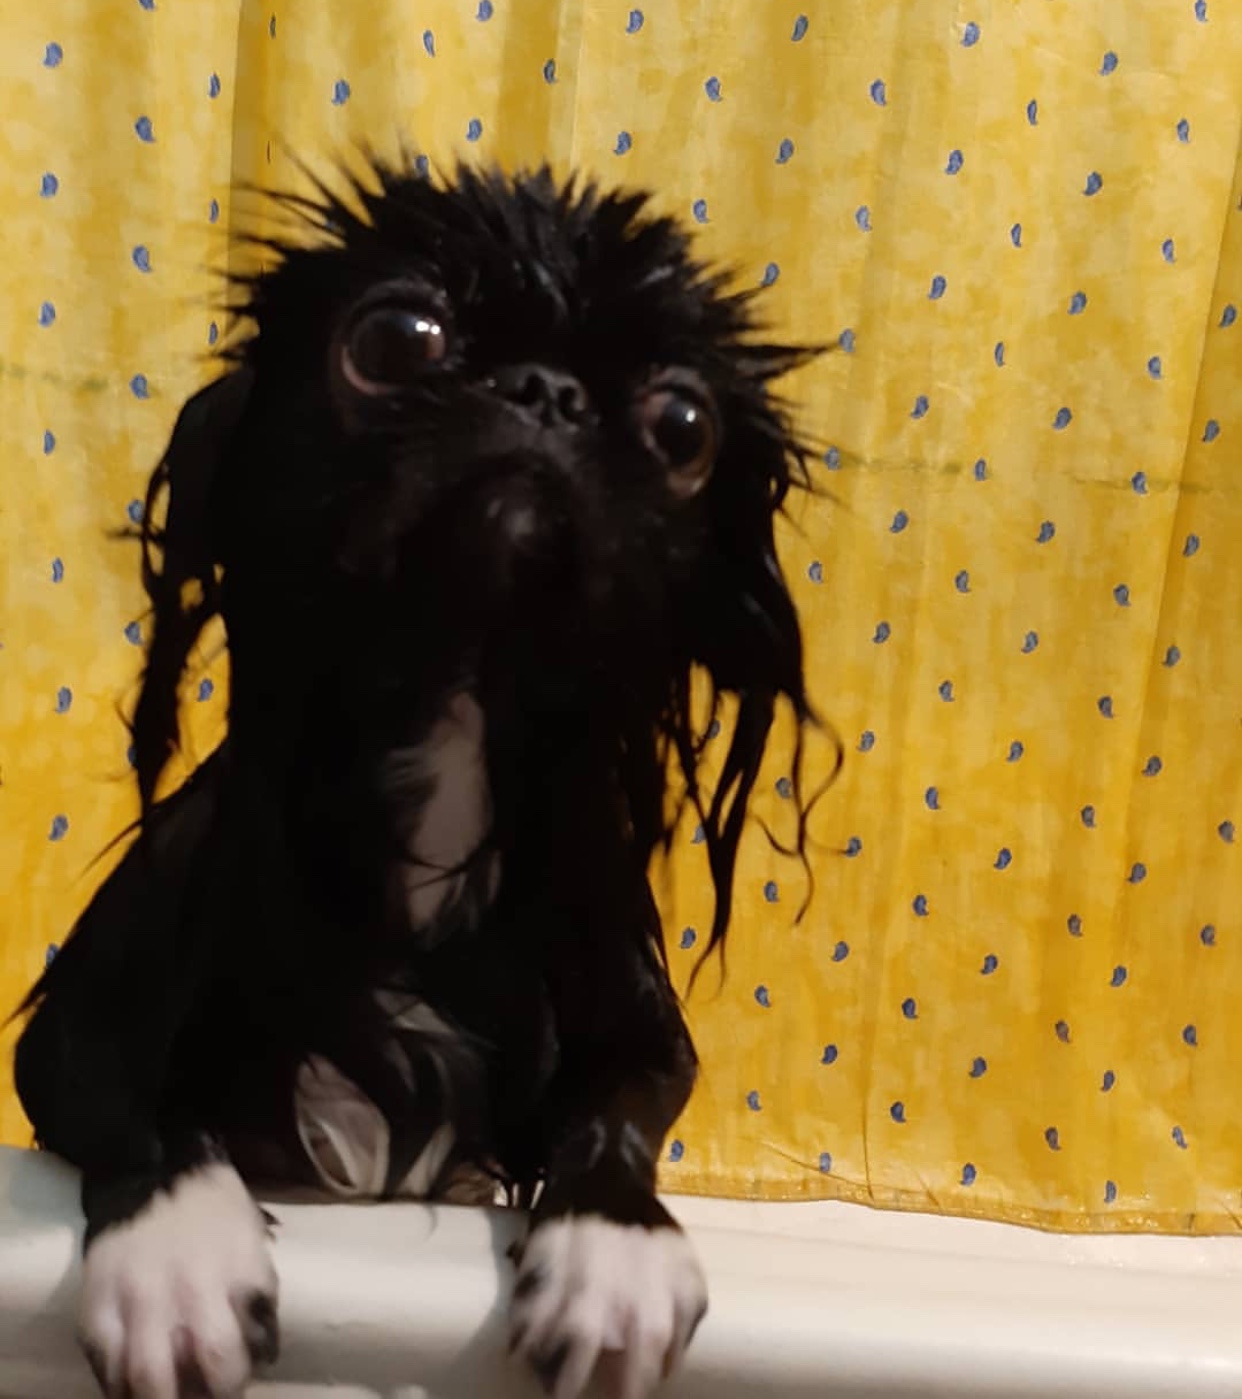 A soaking wet Pekingese inside the bathtub